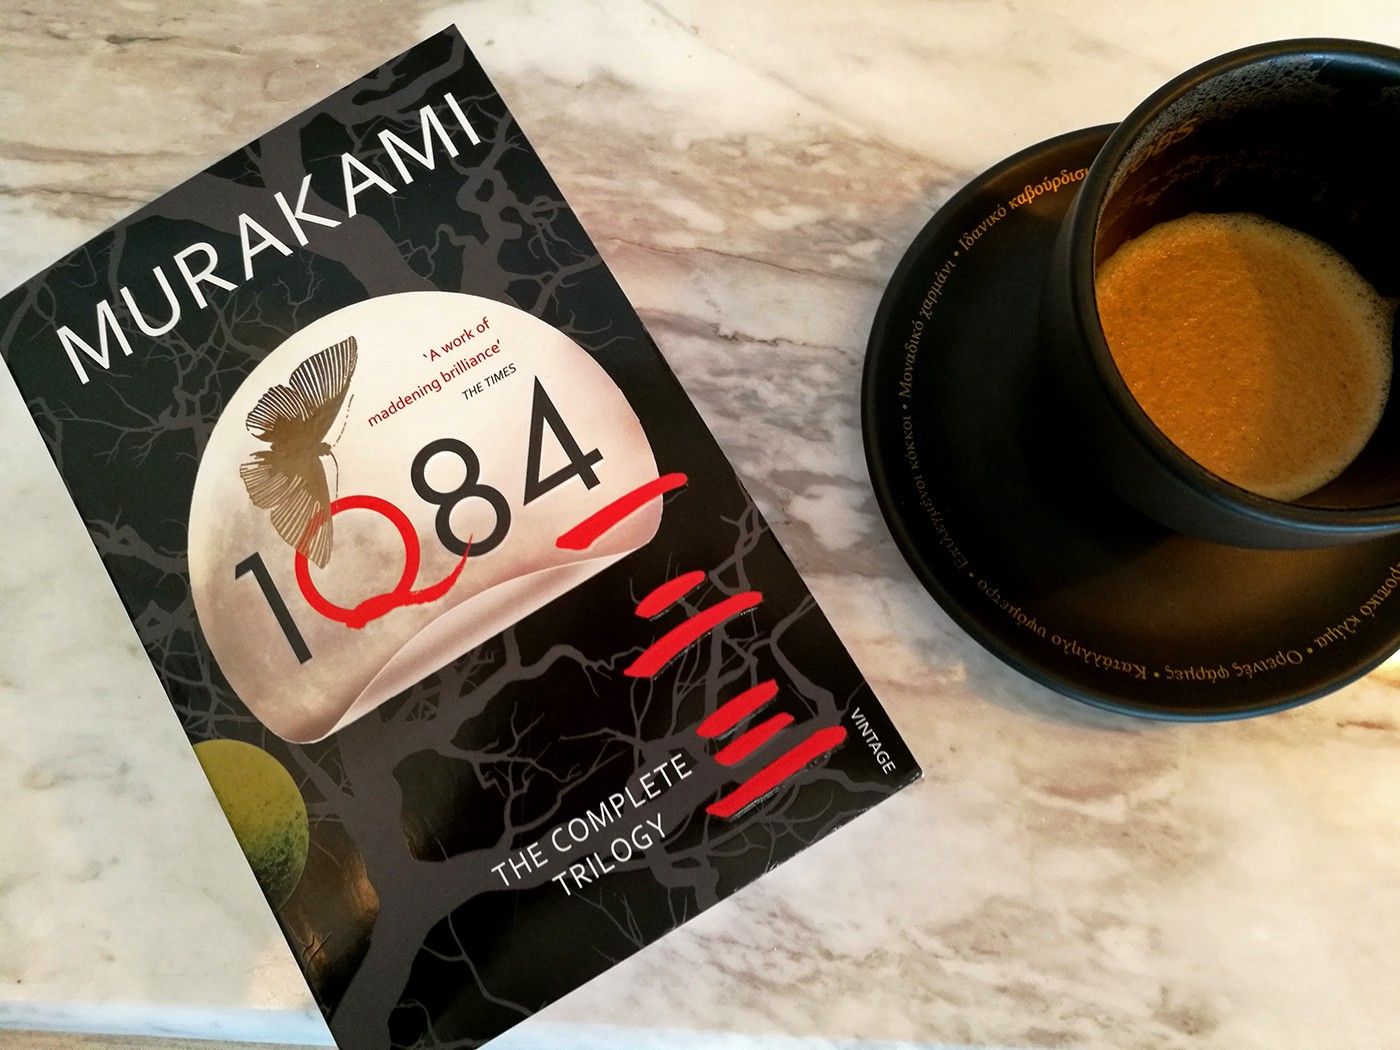 Photograph of Haruki Murakami’s 1Q84 trilogy, taken by the author.